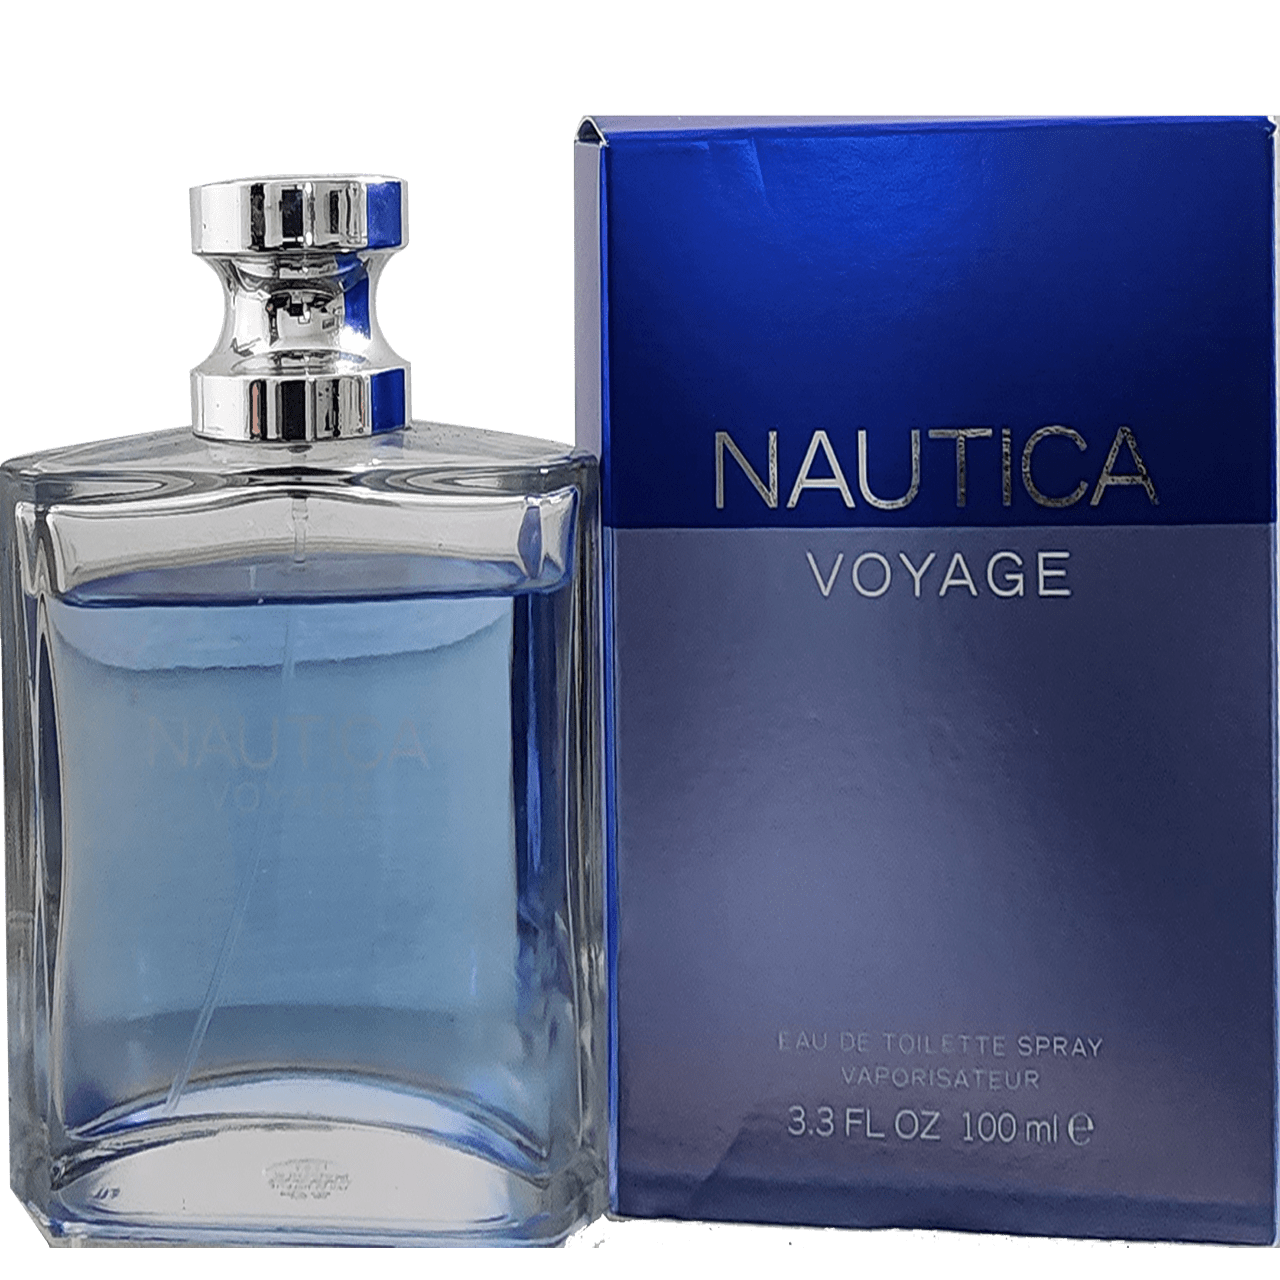 nautica voyage 10ml